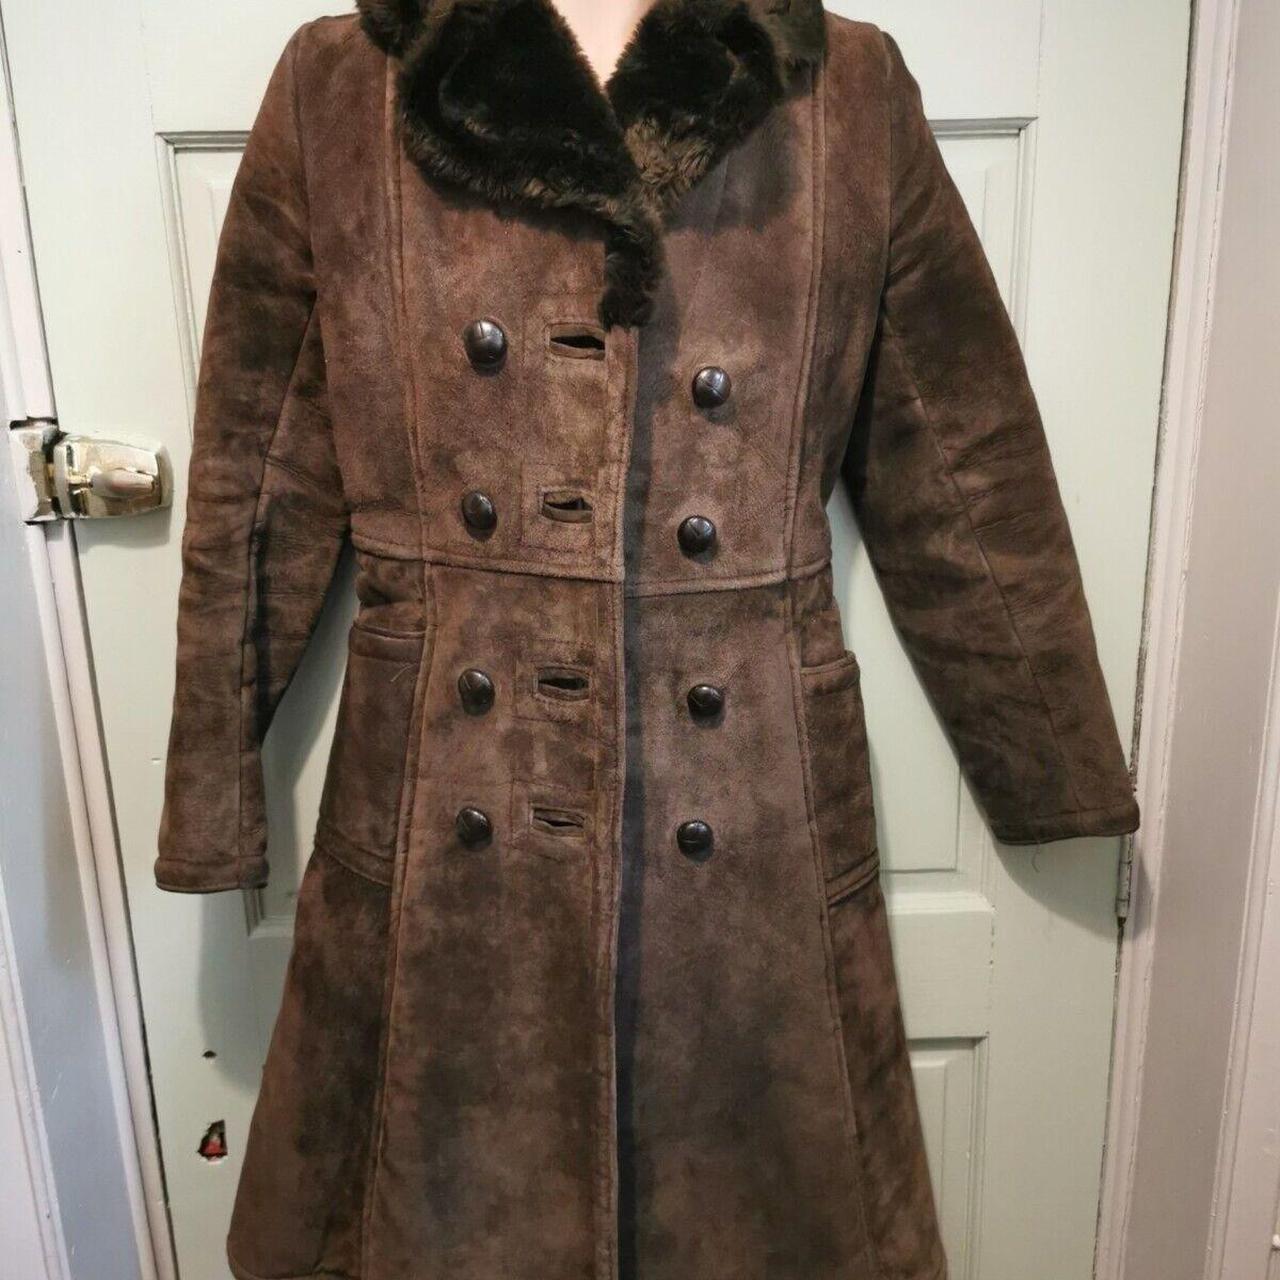 Vintage Jacket 90s Y2K Penny Lane Hippie Leather Fur... - Depop